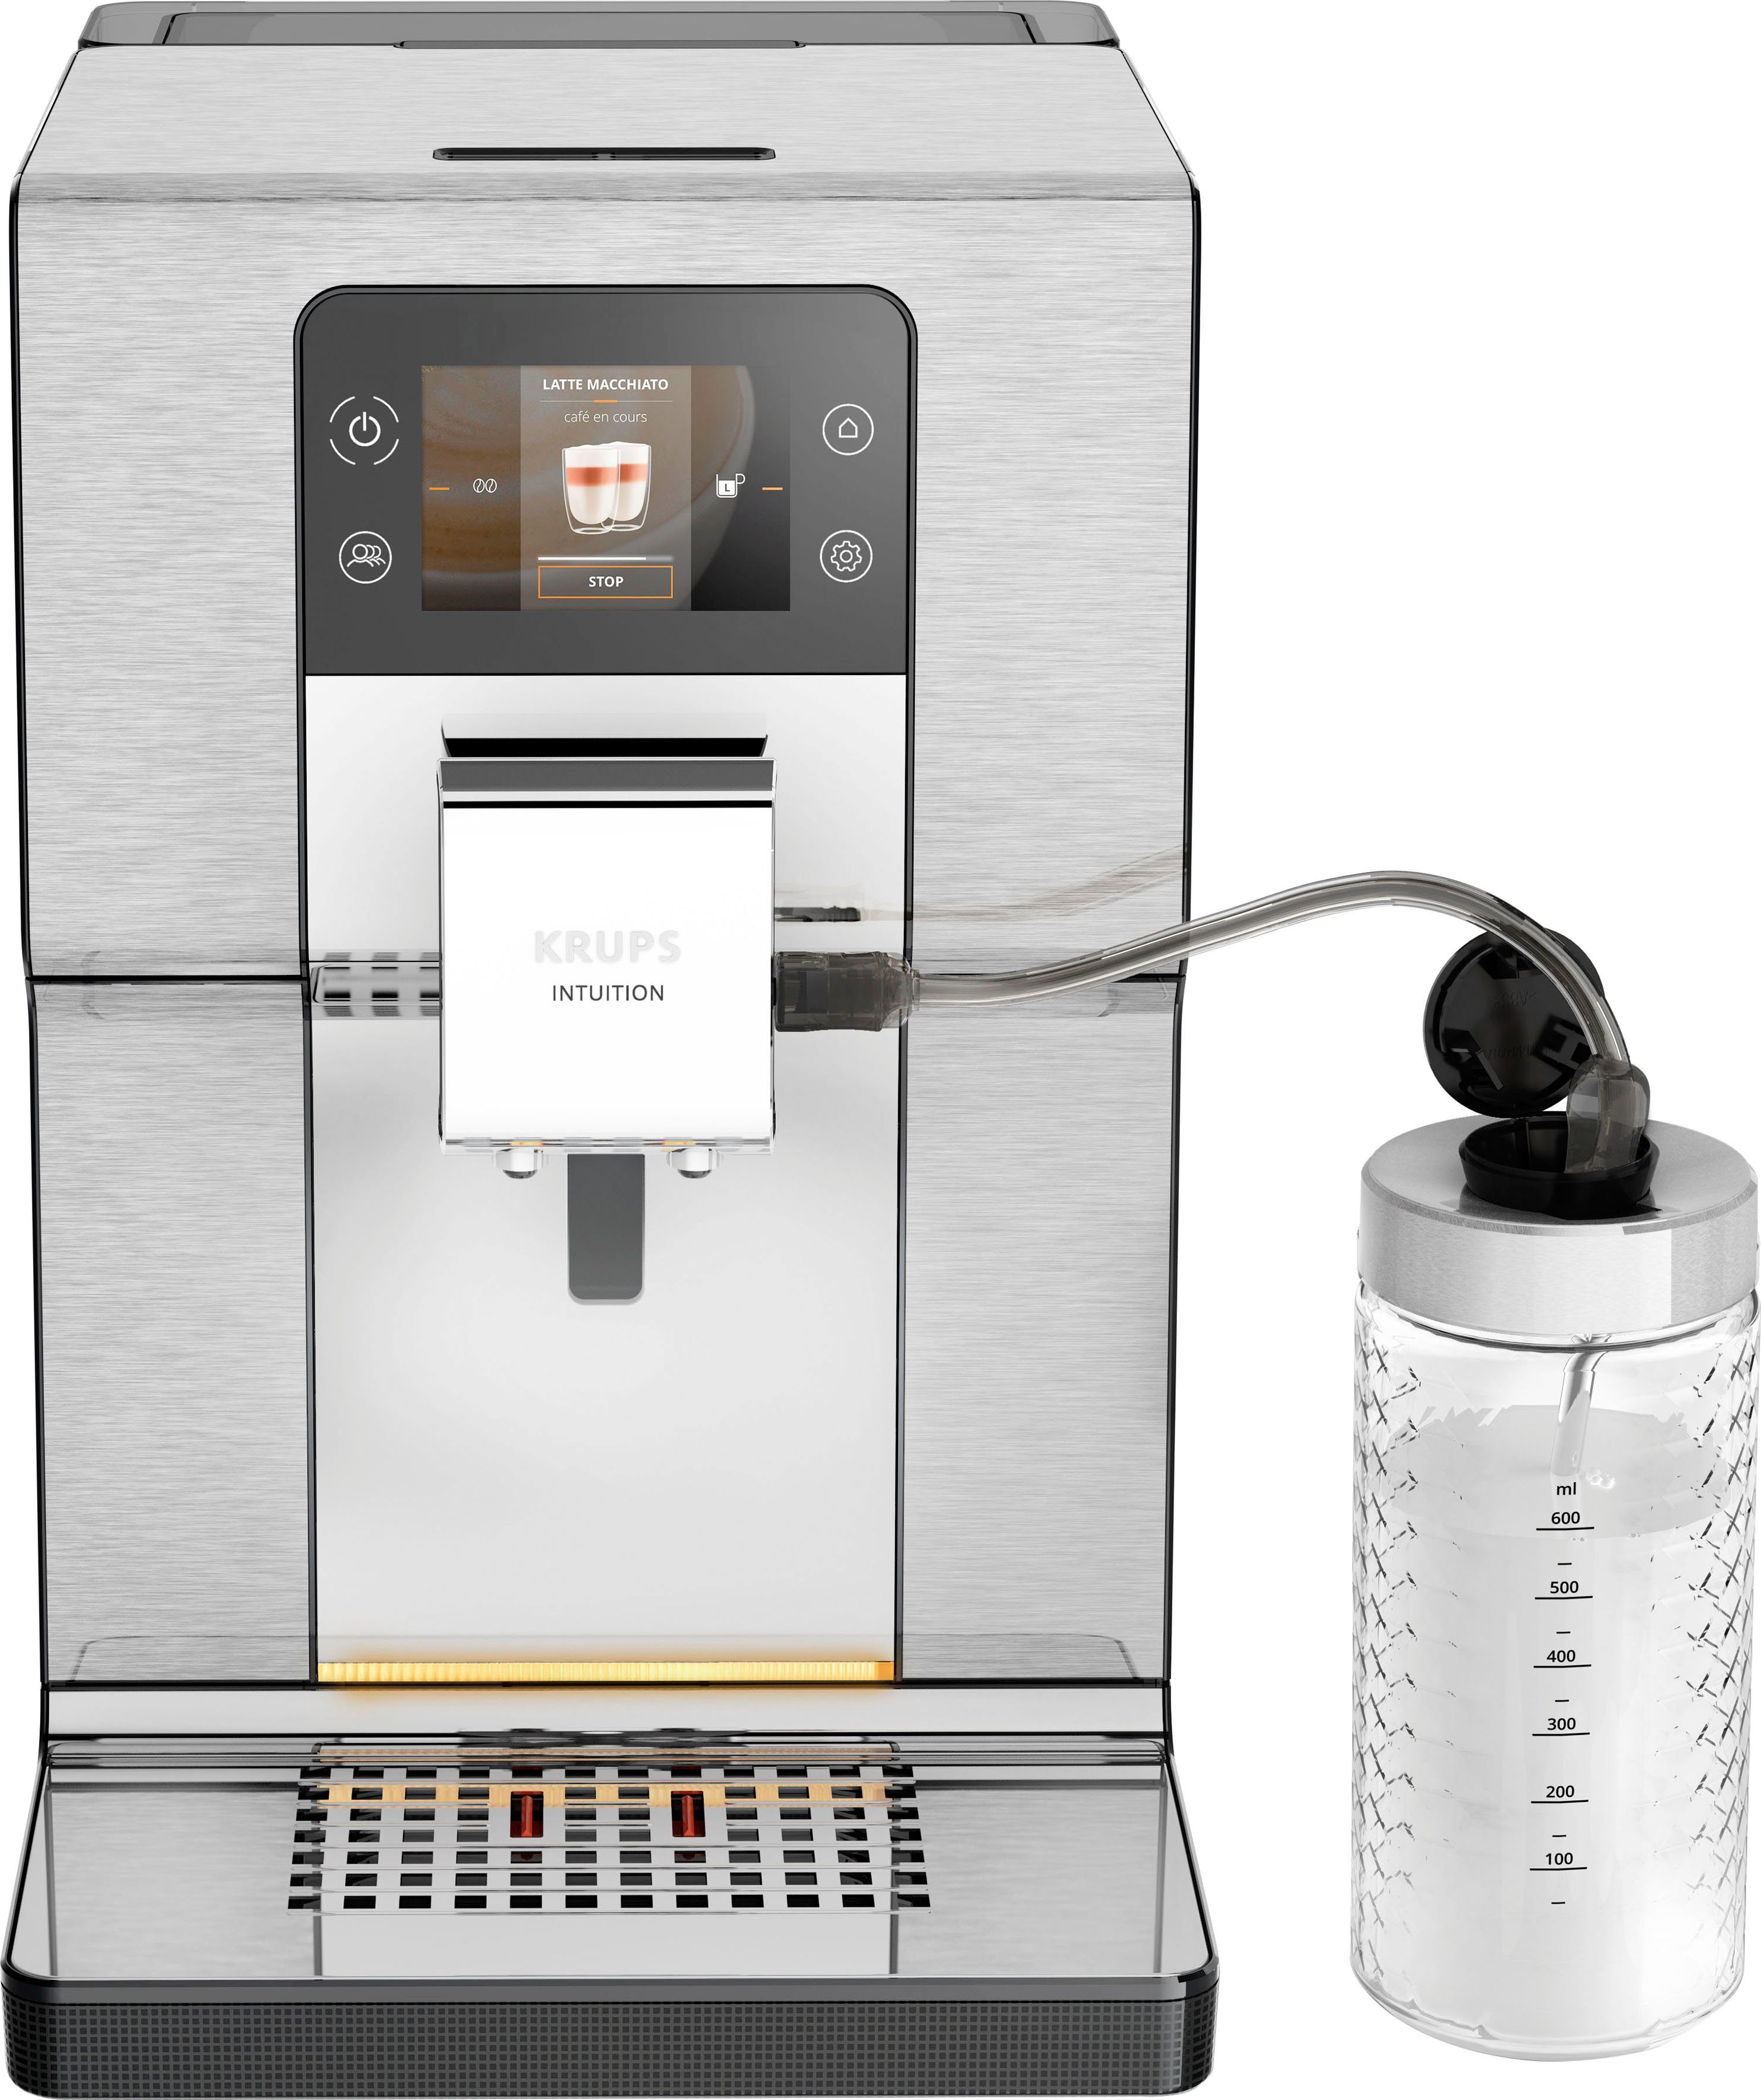 Krups 21 geräuscharm, Kaltgetränke-Spezialitäten, EA877D Kaffeevollautomat Farb-Touchscreen und Intuition Experience+, Heiß-